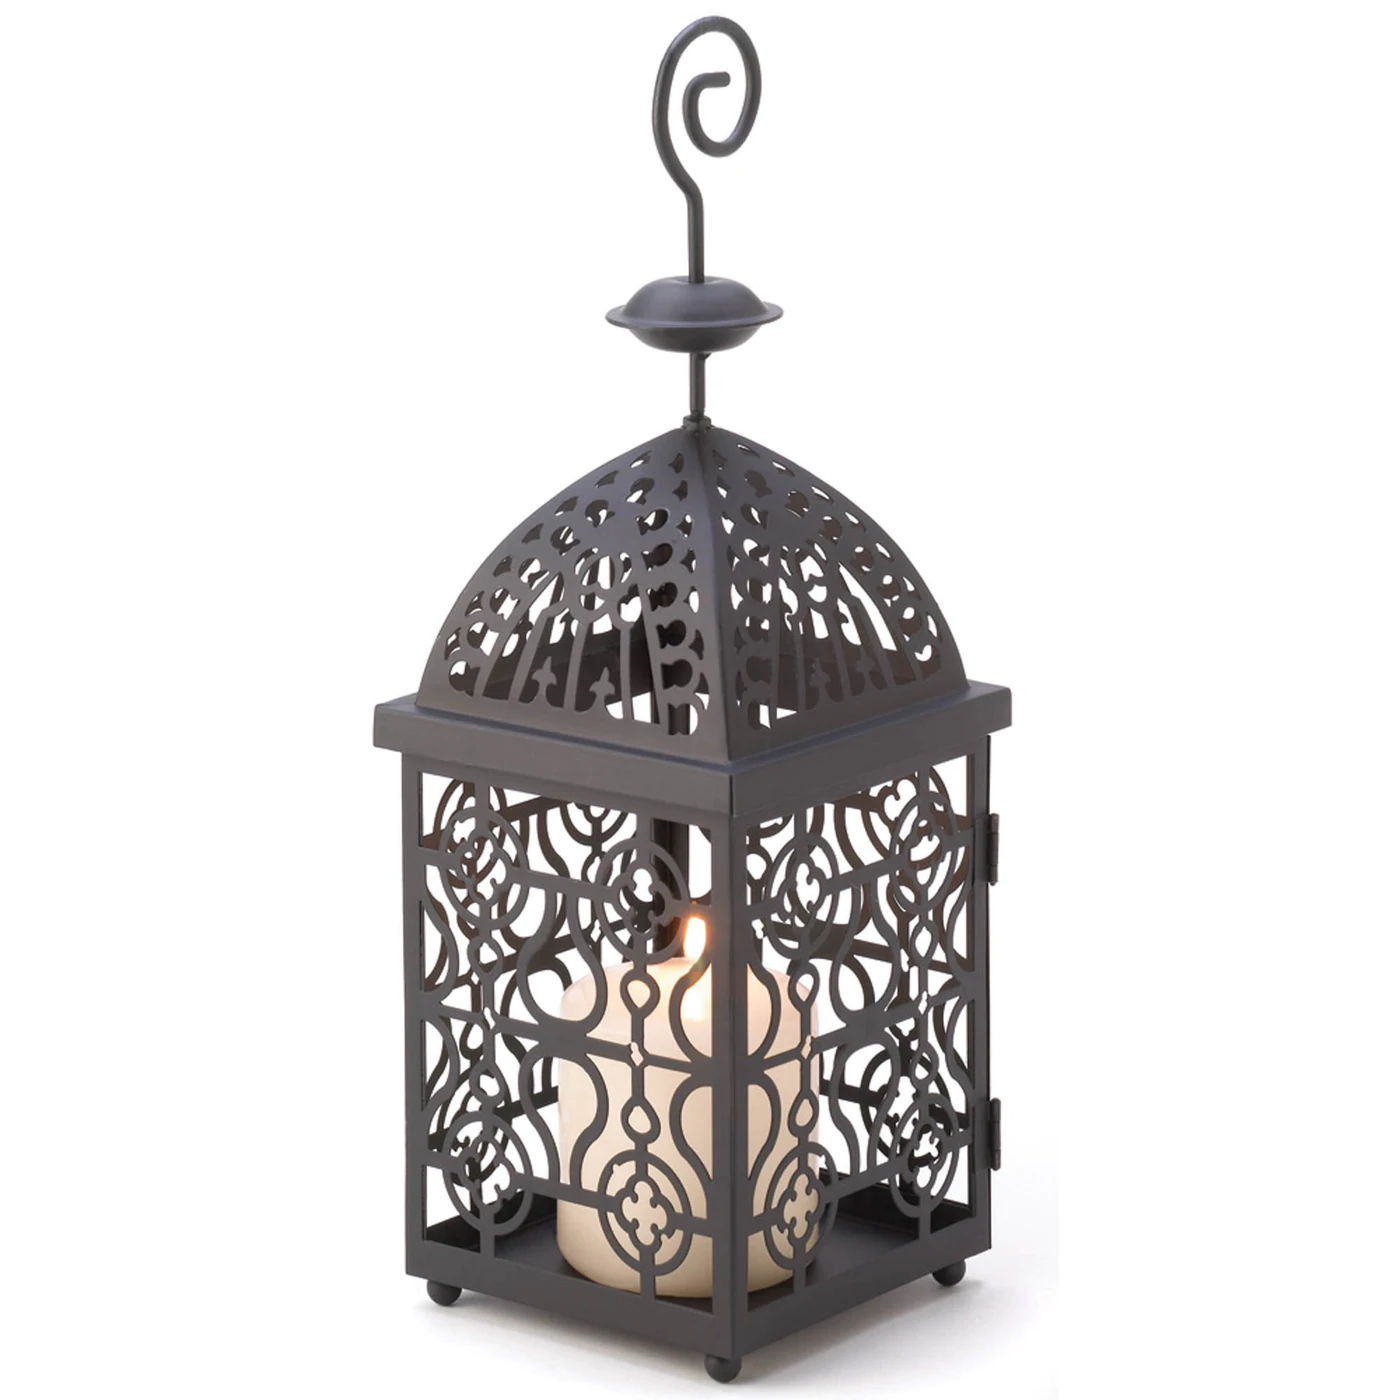 Moroccan Birdcage Candle Lantern - $24.49